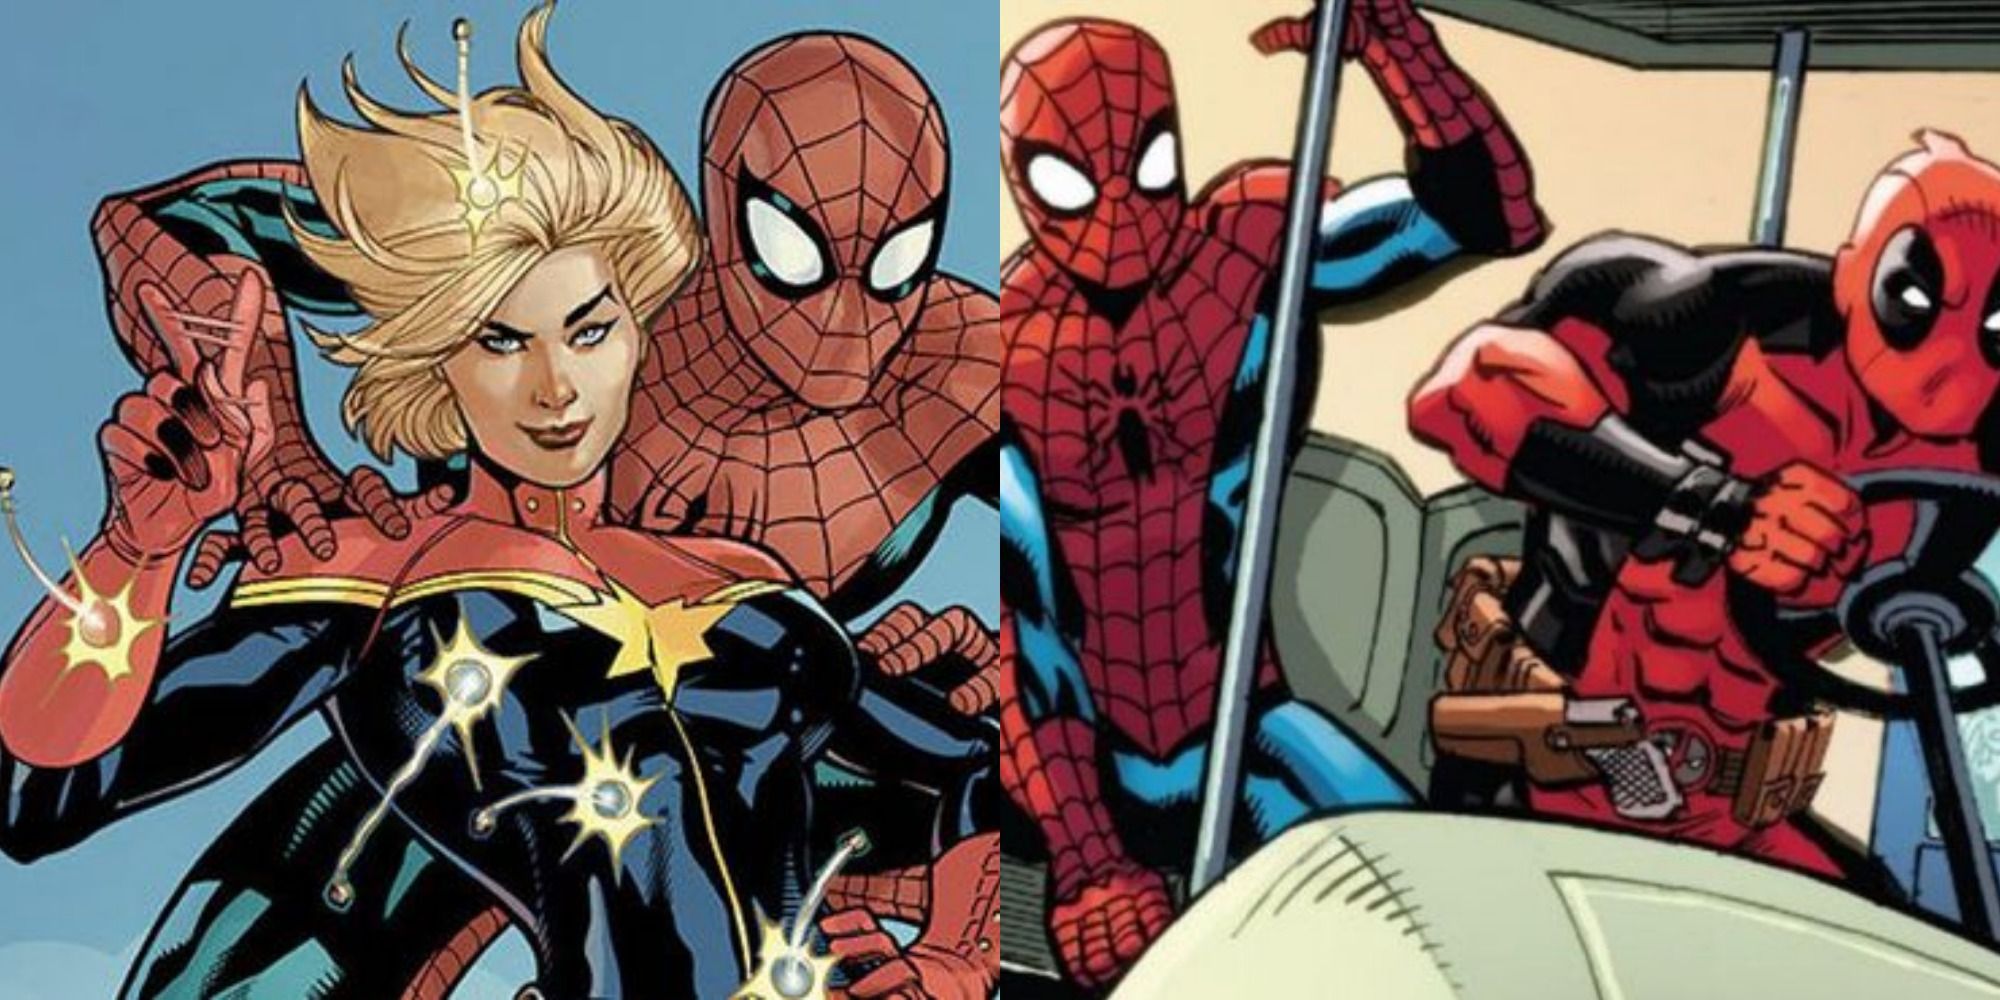 Captain Marvel with Spider-Man/Deadpool drives Spider-Man